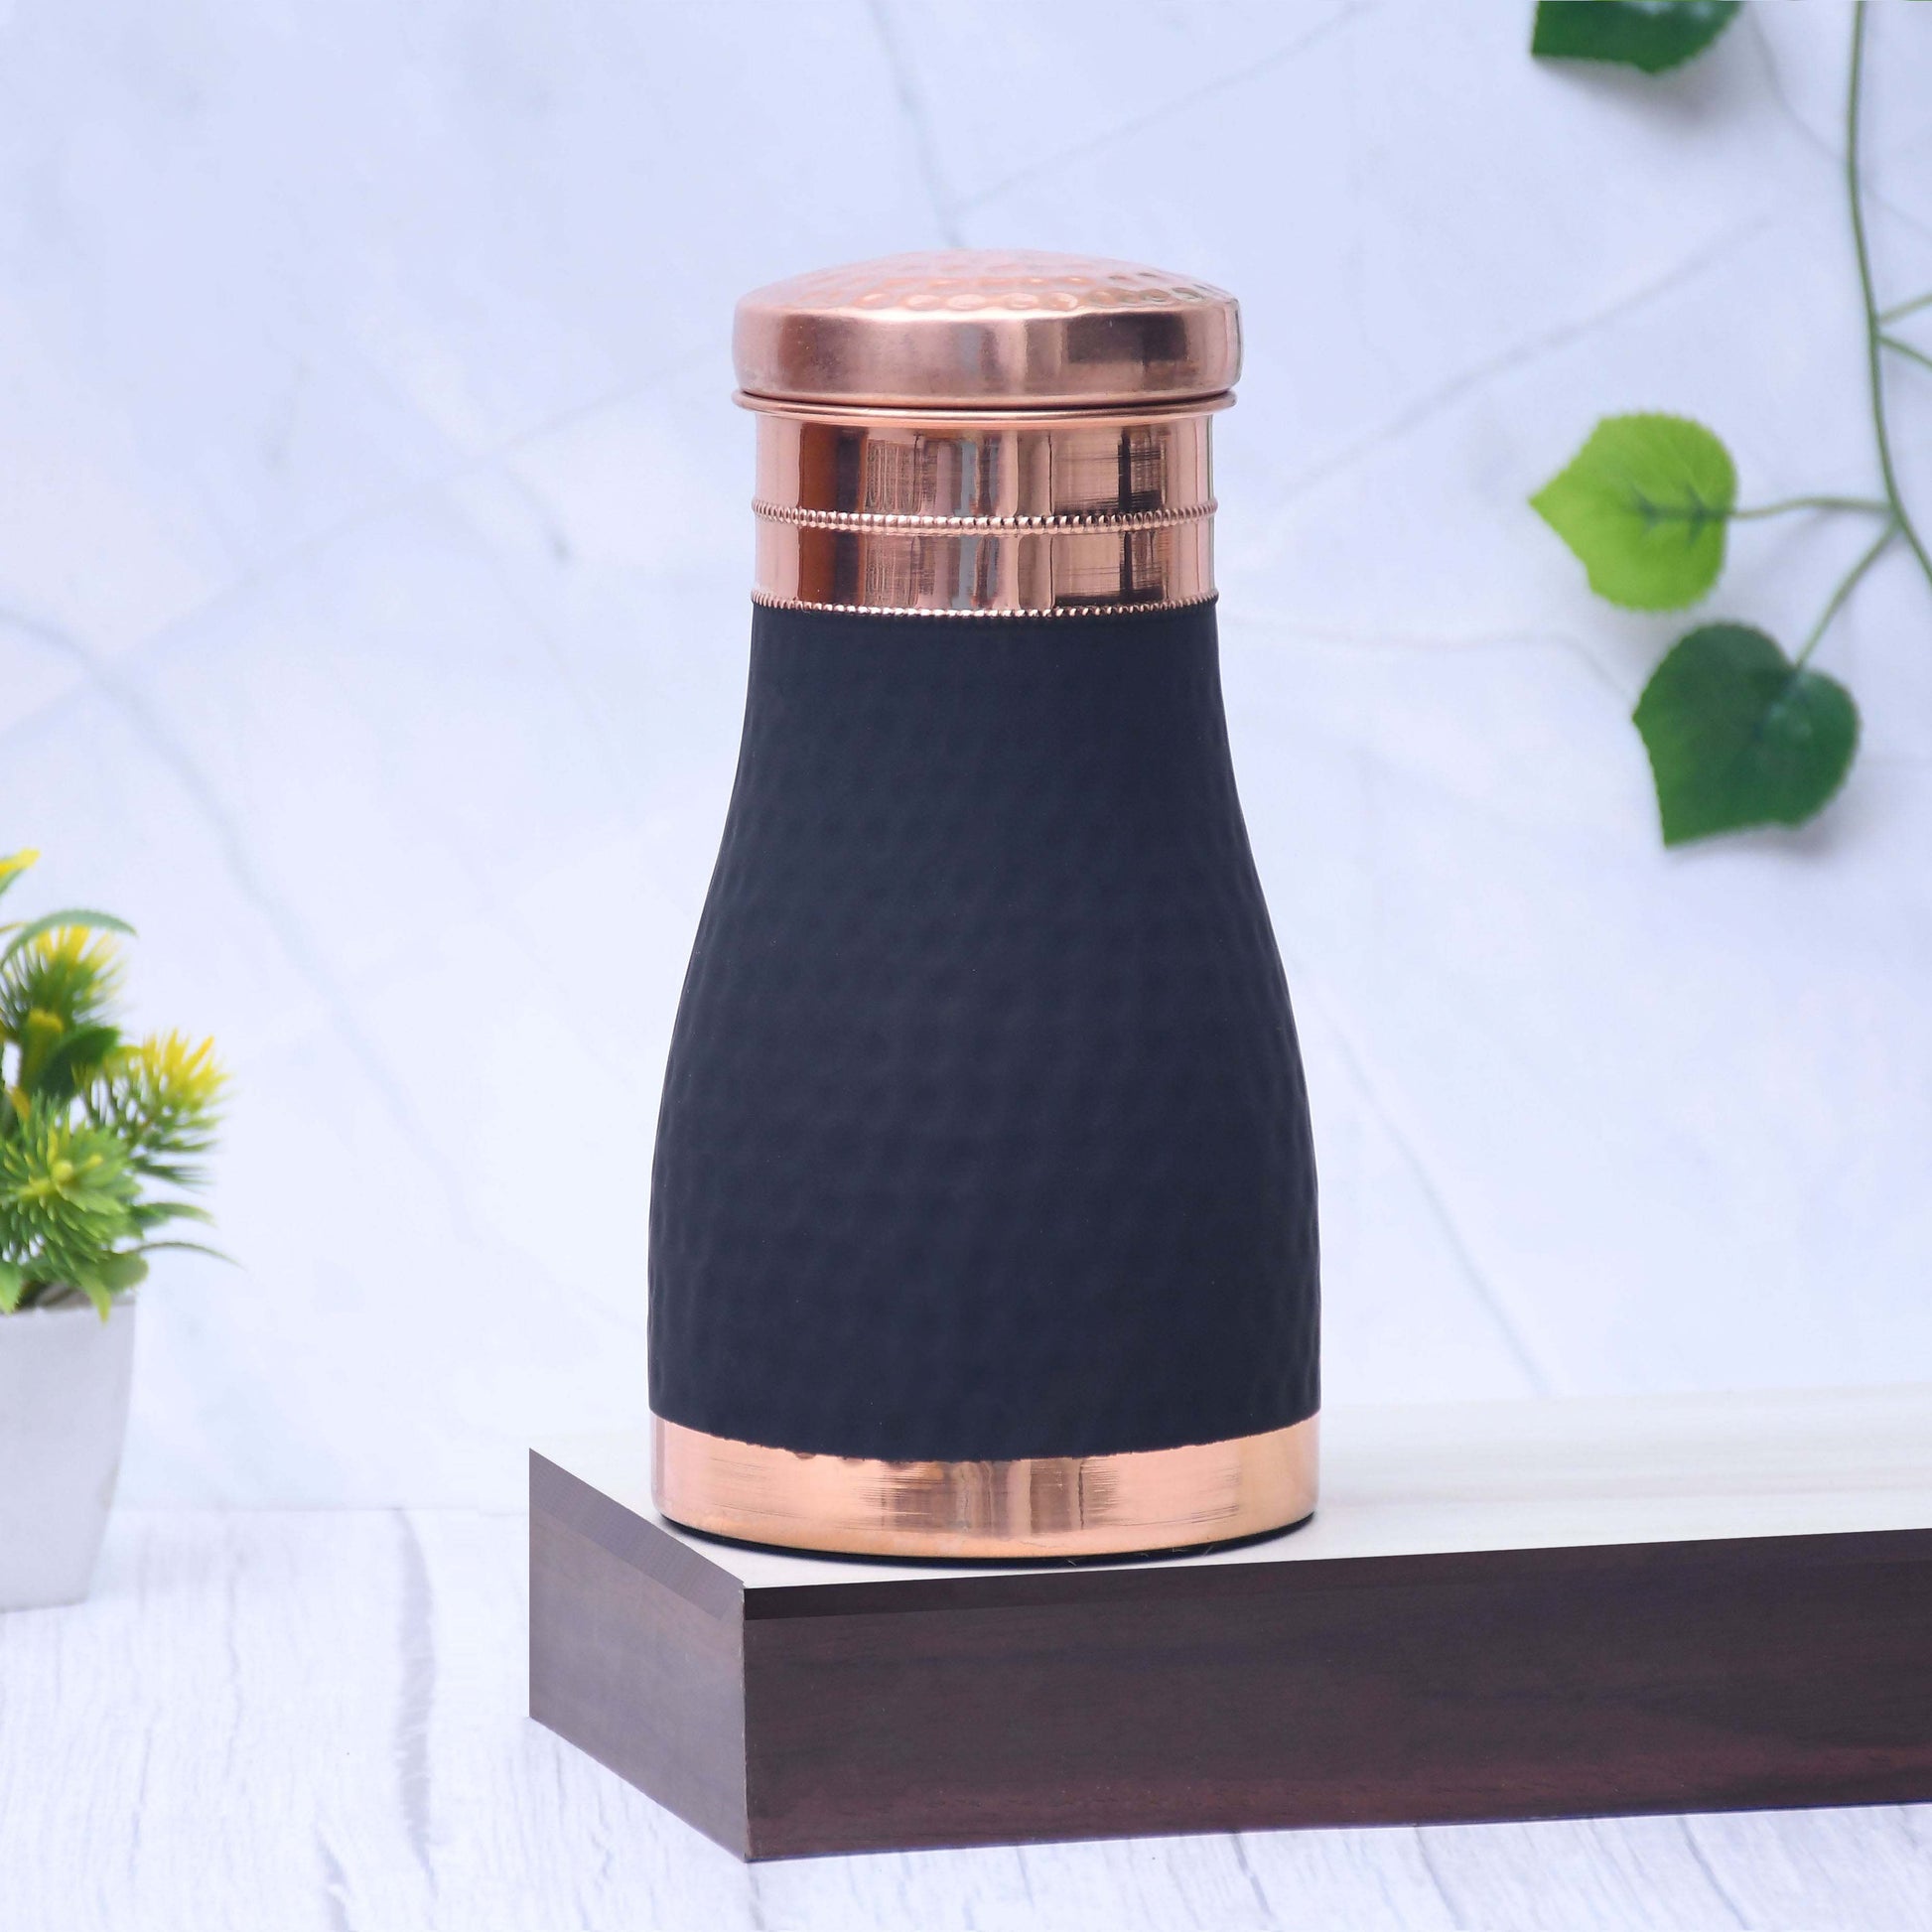 SAMA Homes - copper black bedside bedroom jar with inbuilt glass drinkware storage purpose capacity 1000ml